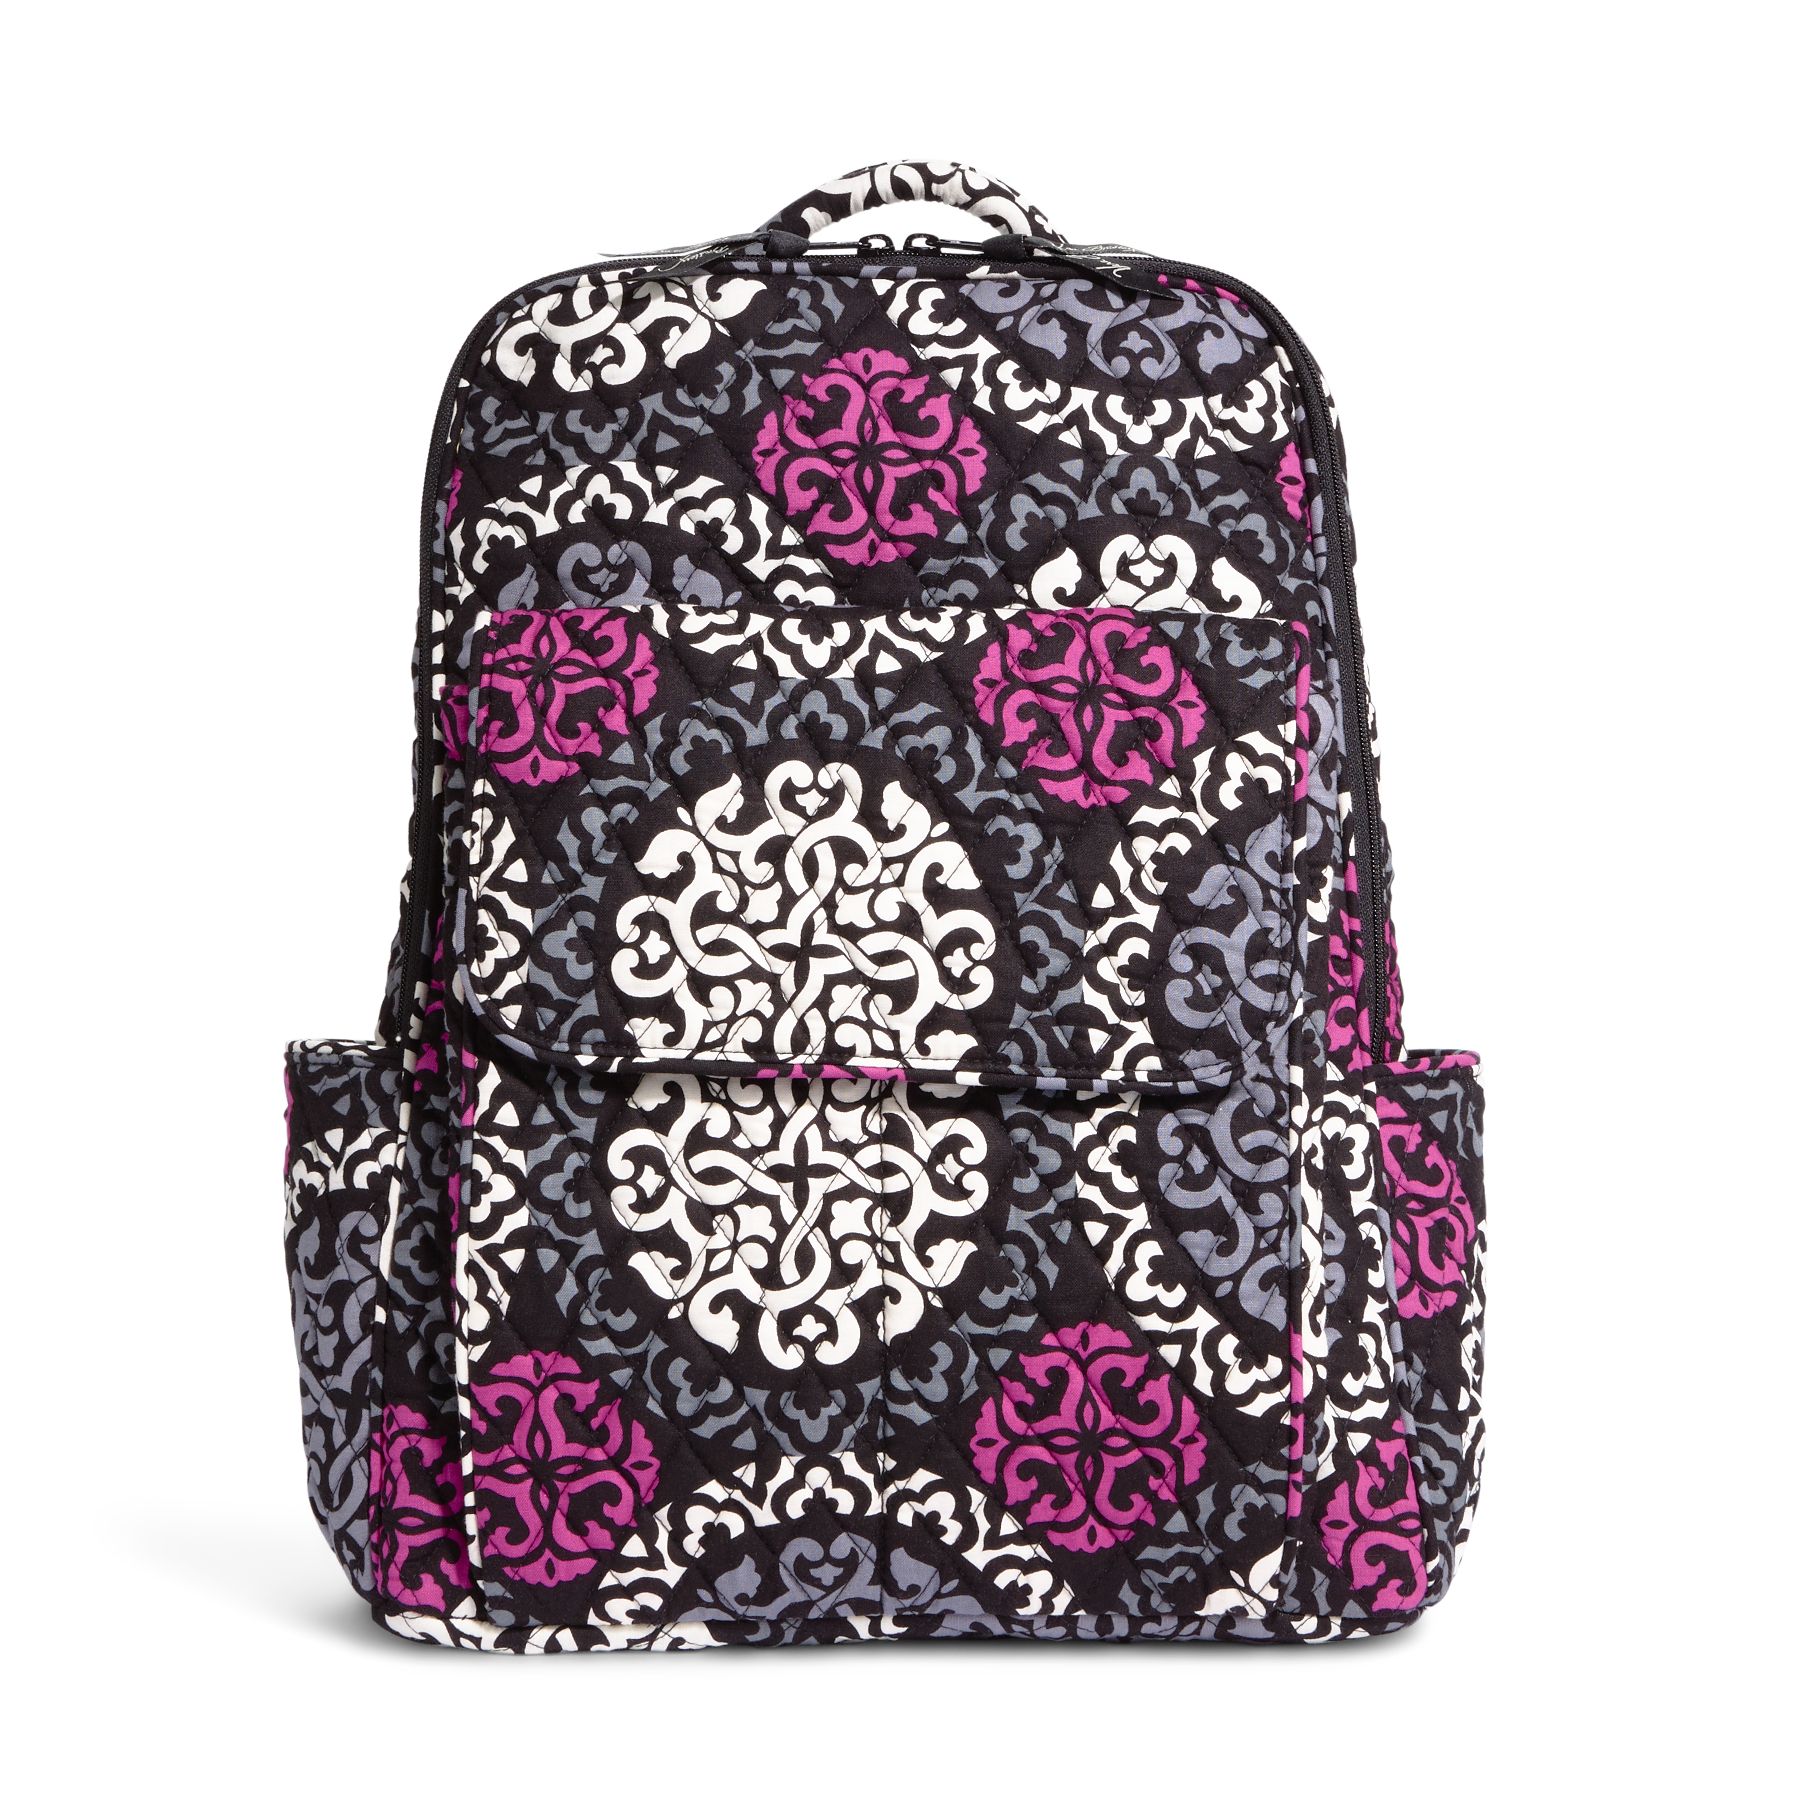 Vera Bradley Ultimate Backpack | eBay